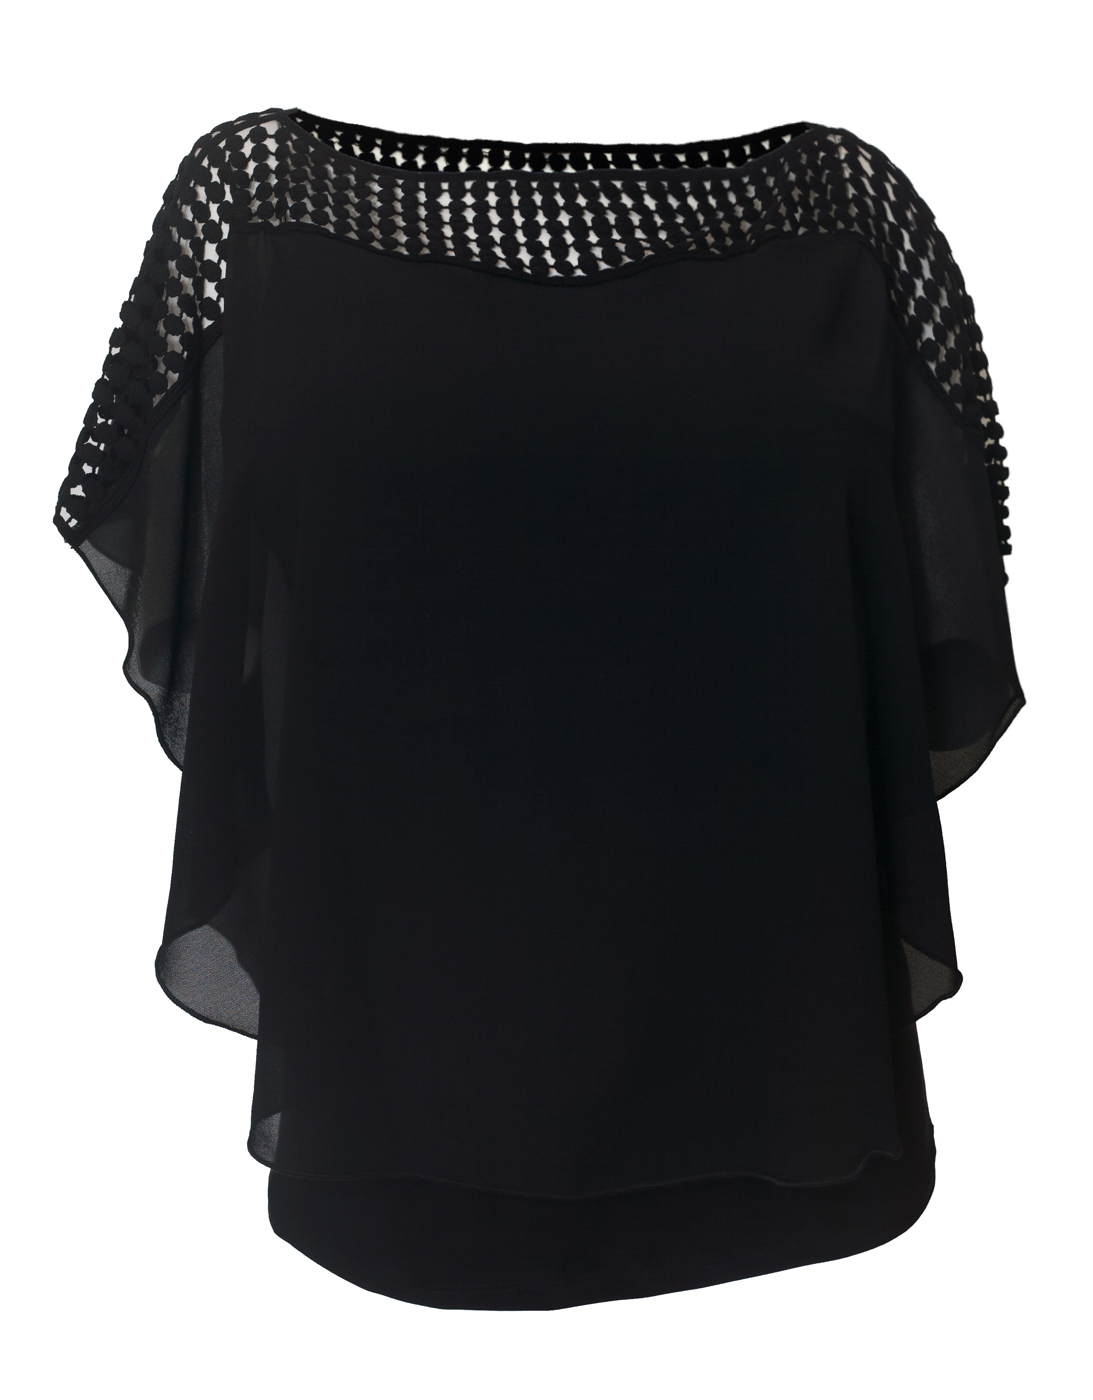 Plus Size Layered Poncho Top Crochet Shoulder Black 18528 | eVogues Apparel